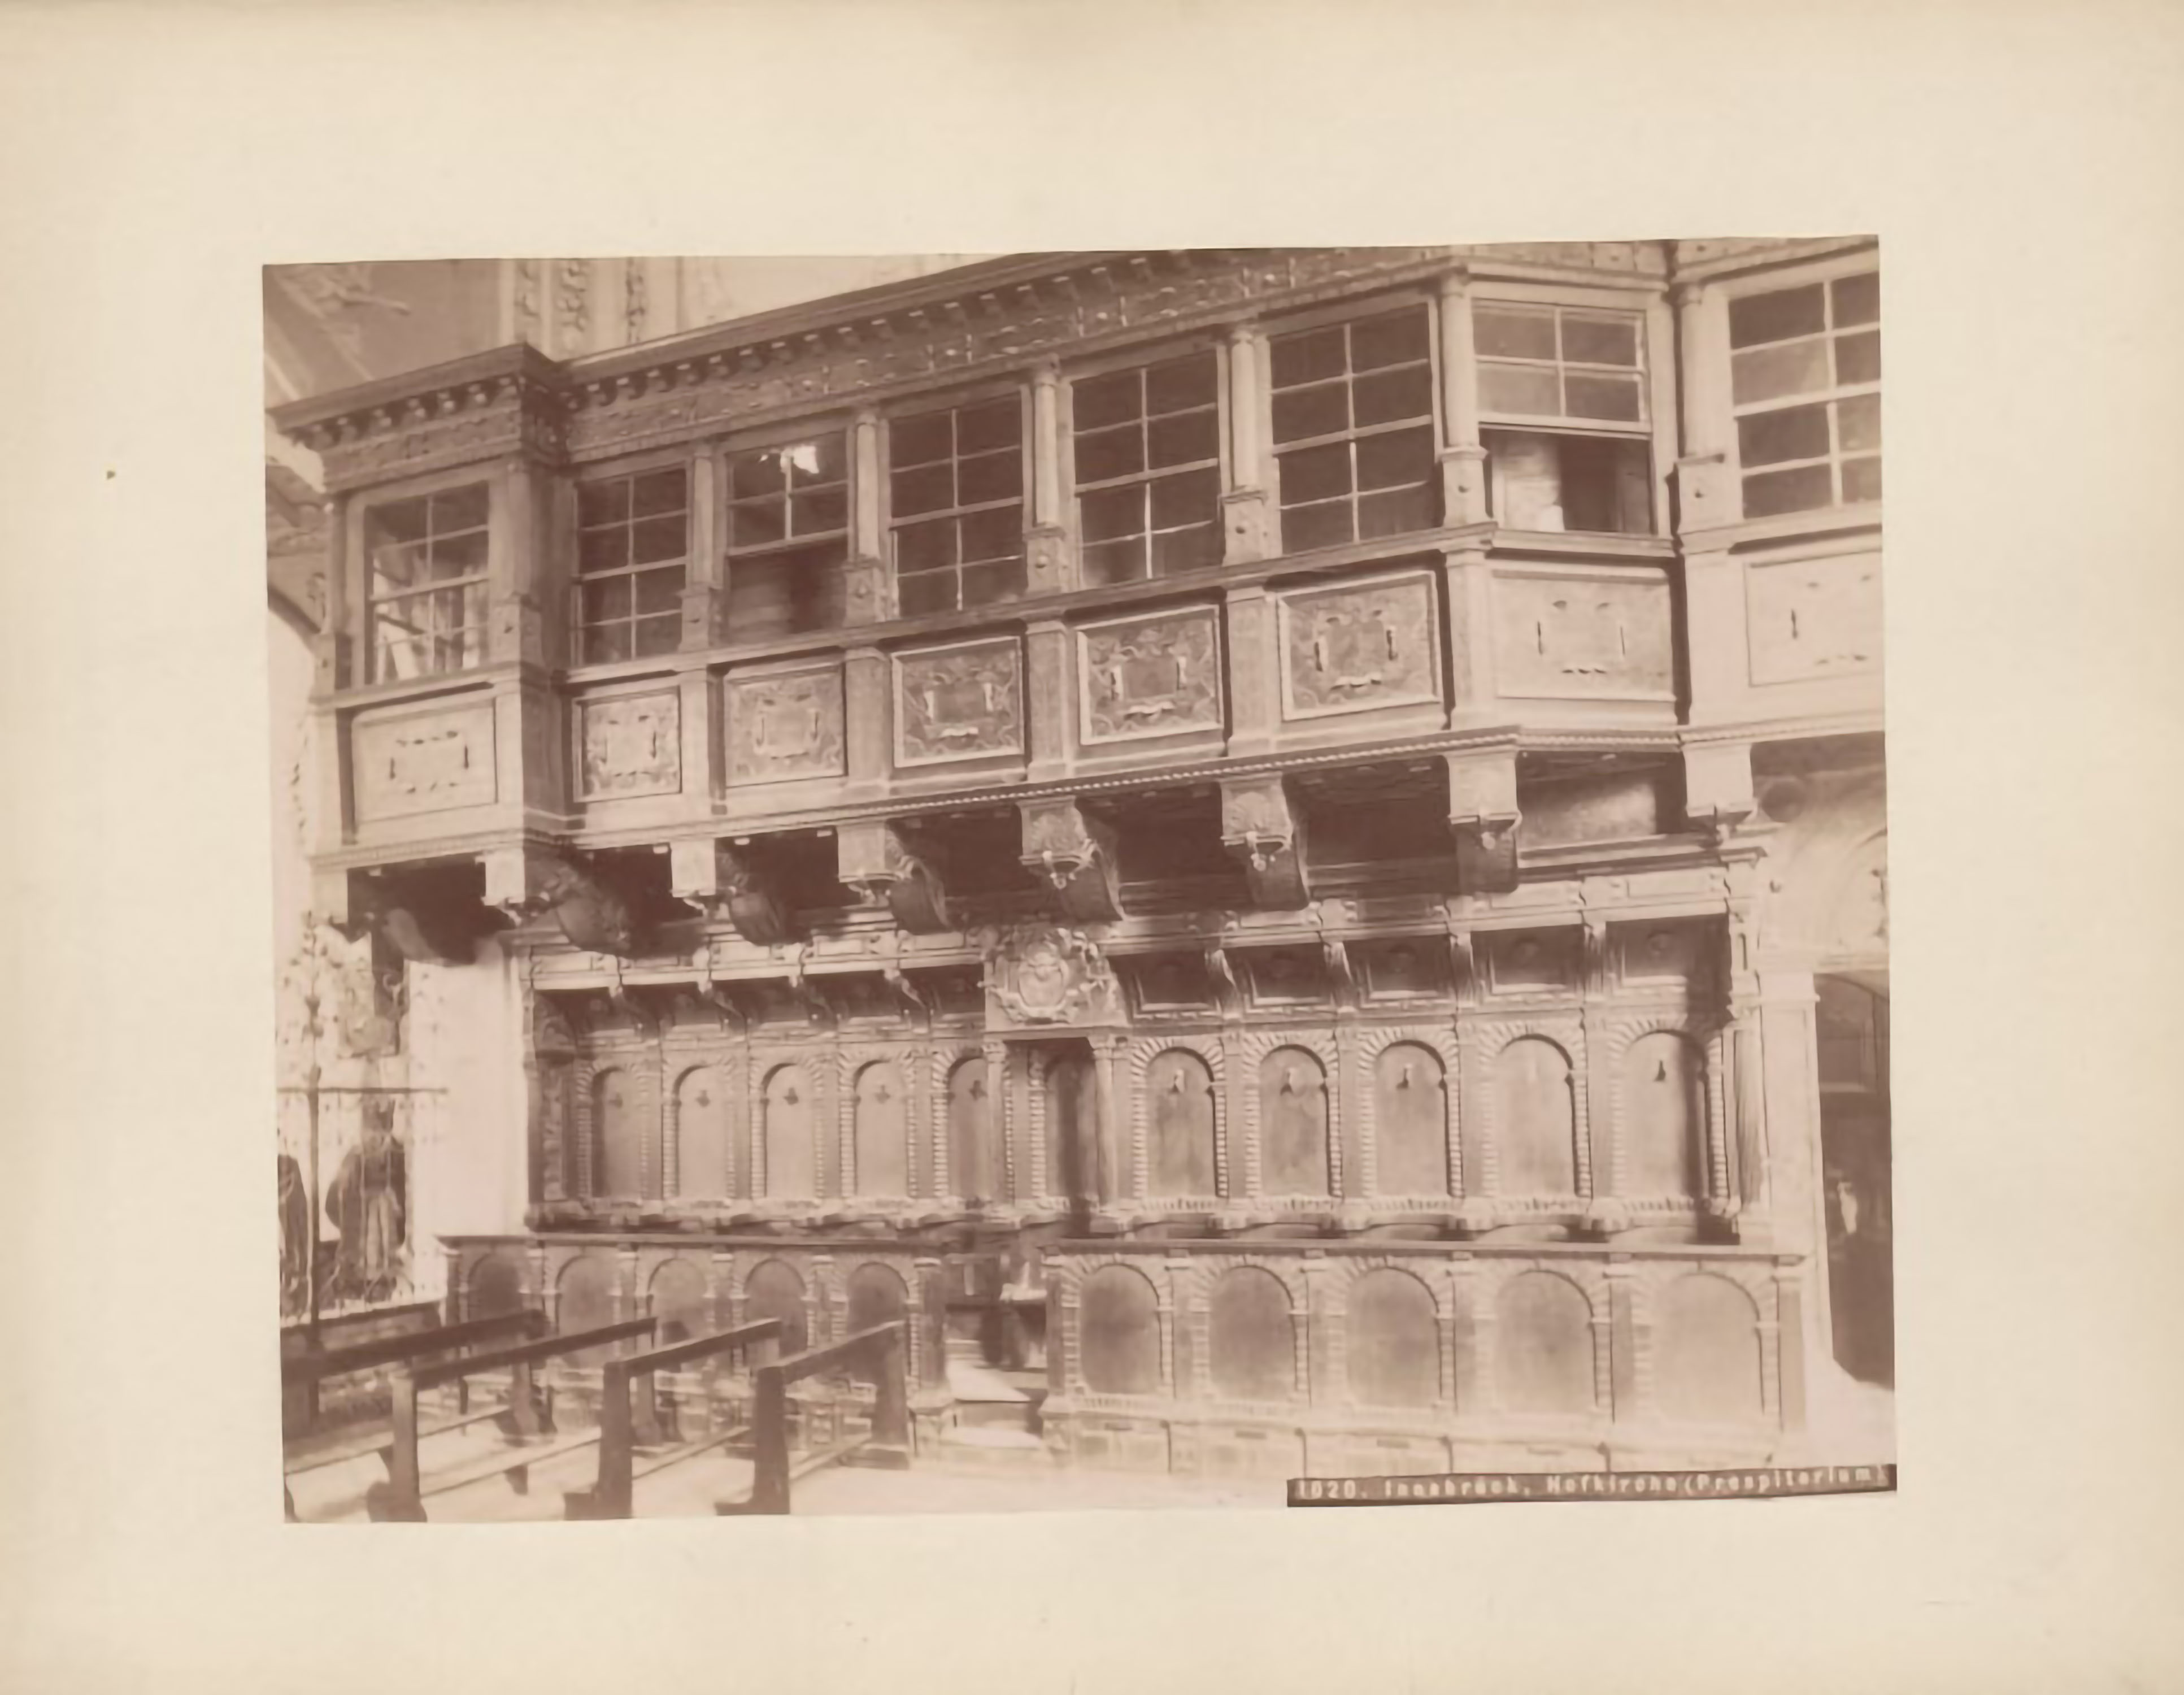 Fotografie (Albuminabzug auf Karton), Hofkirche (Presbyterium), Innsbruck, Verlag Unterberger, Inv.-Nr. 6715, 25 x 32,5 cm